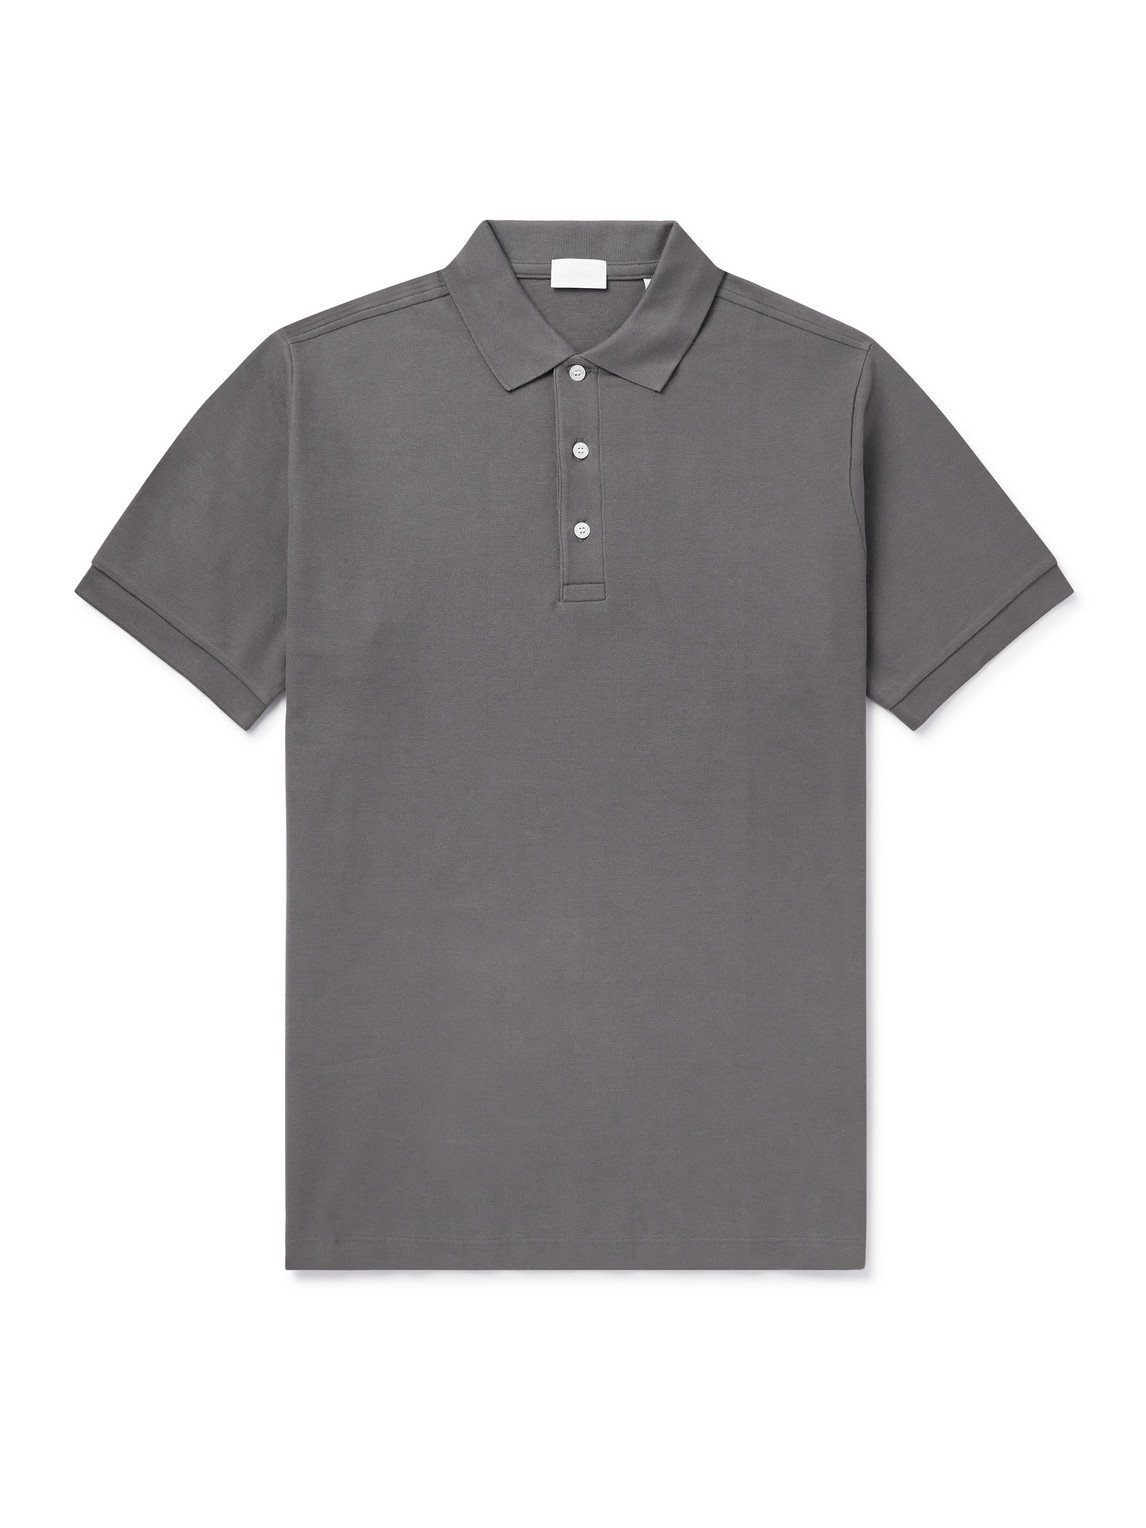 Håndværk - Pima Cotton-Piqué Polo Shirt - Men - Gray - S von Håndværk